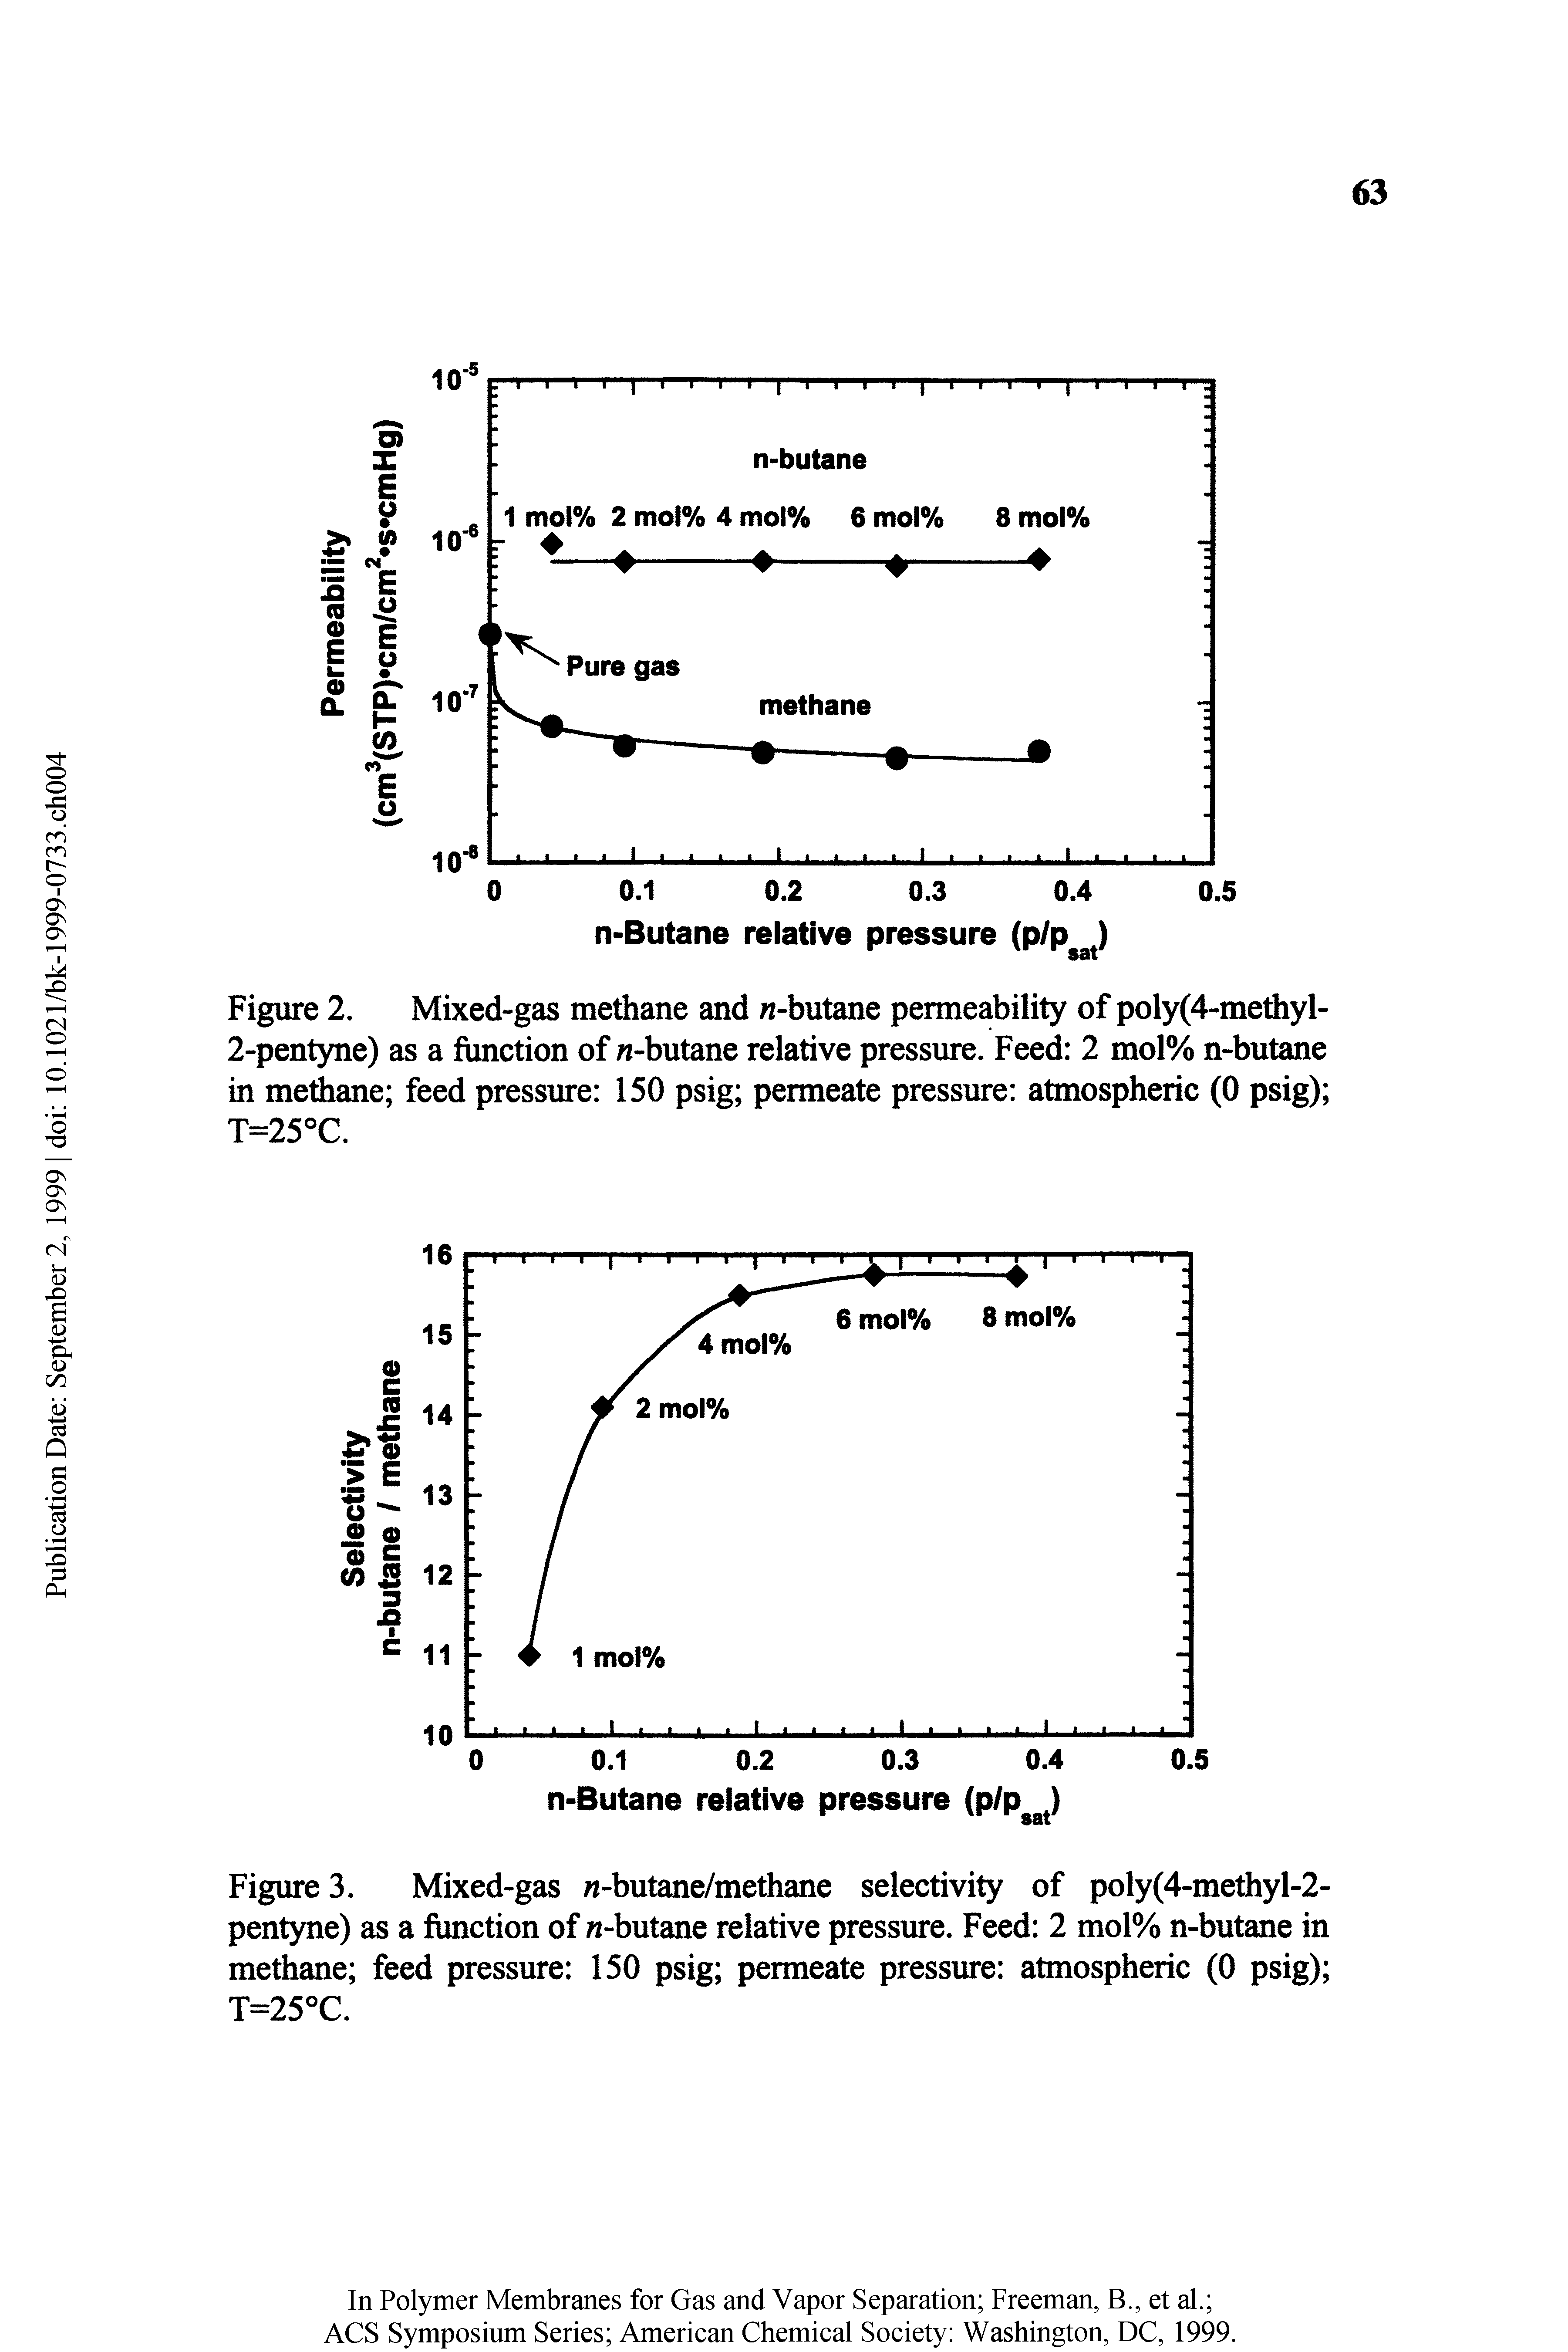 Figure 2. Mixed-gas methane and w-butane permeability of poly(4-methyl-2-pentyne) as a function of -butane relative pressure. Feed 2 mol% n-butane in methane feed pressure 150 psig permeate pressure atmospheric (0 psig) T=25°C.